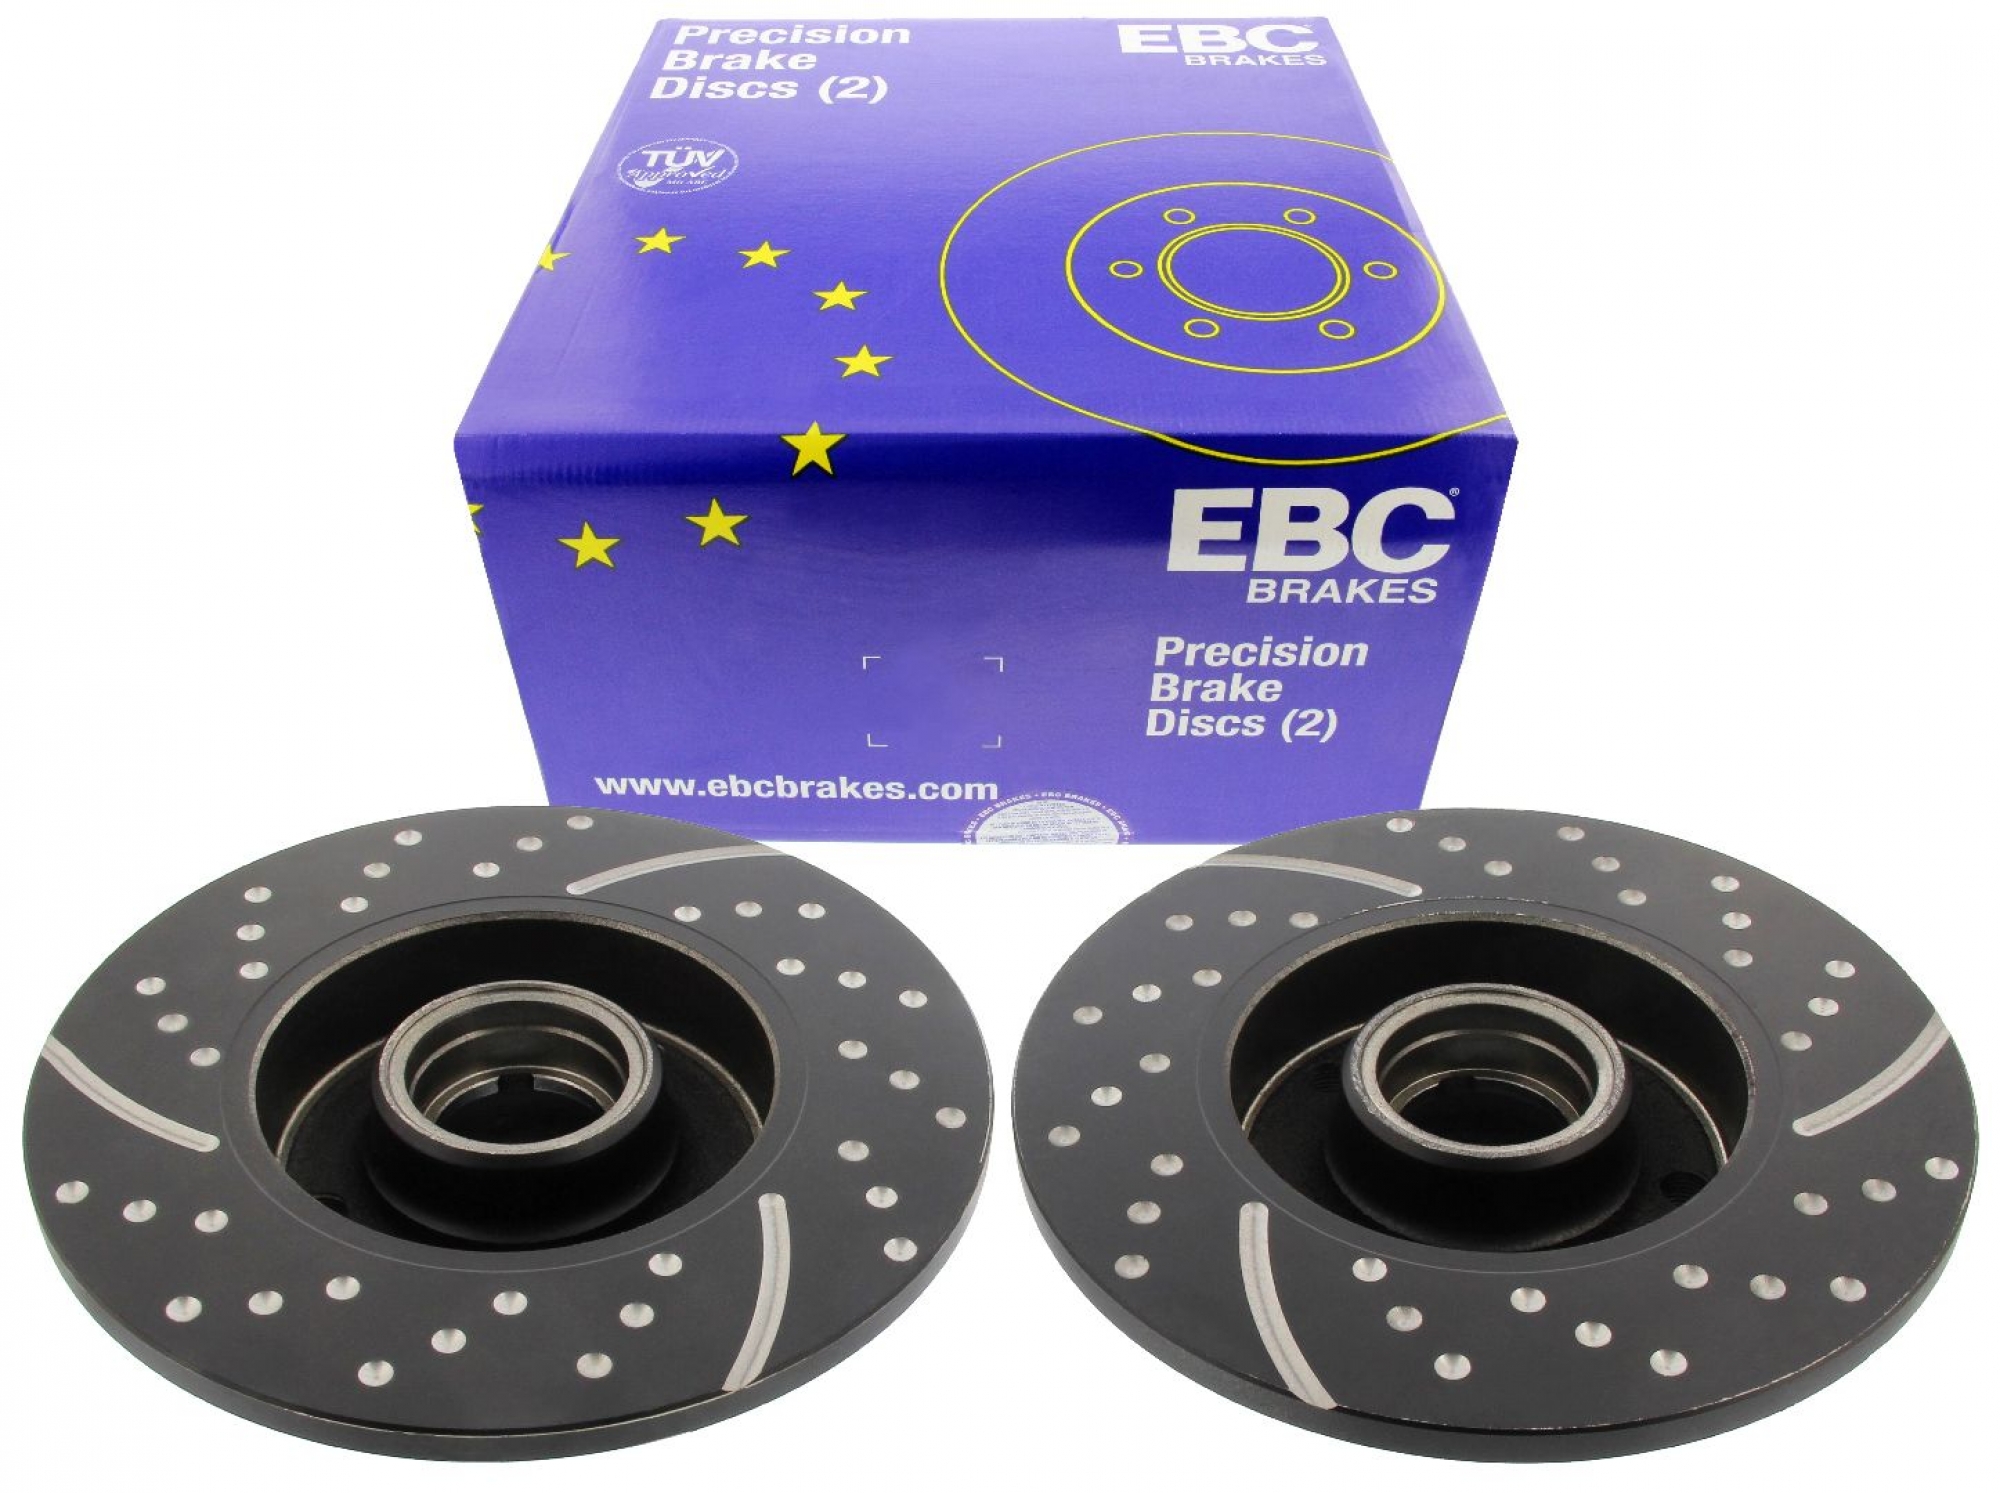 EBC-Bremsscheiben, Turbo Groove Disc Black (2-teilig), HA, Seat Toledo, VW Golf